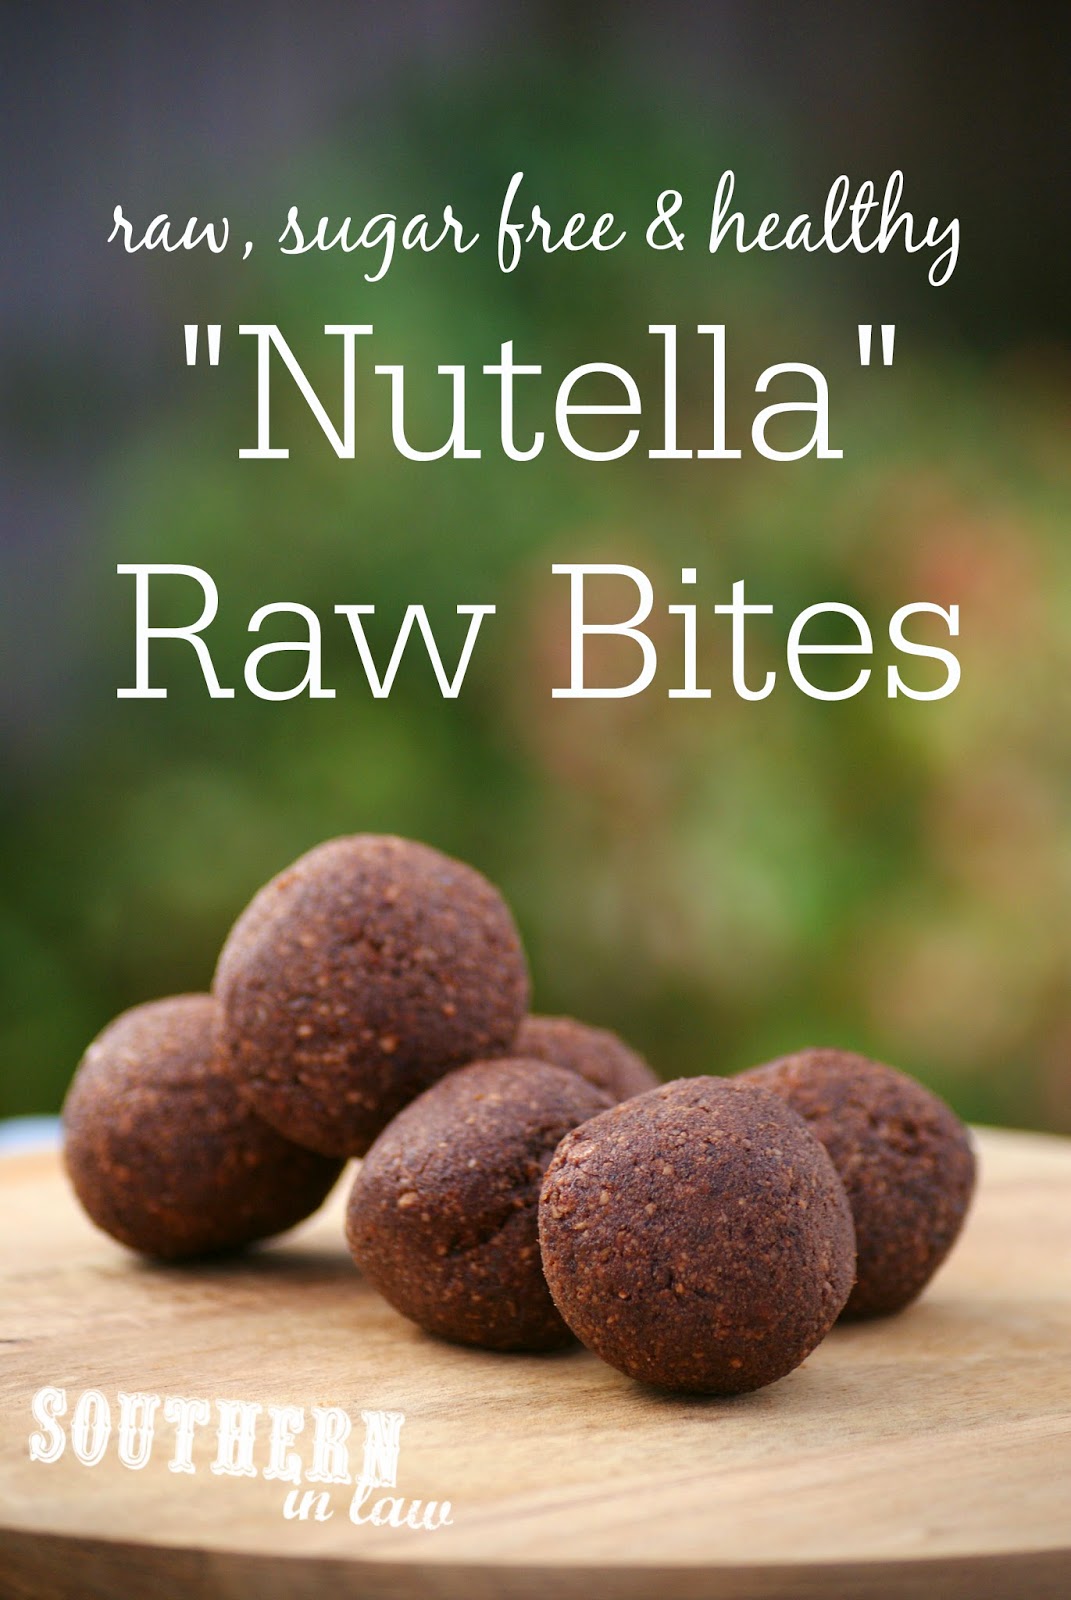 Nutella Raw Bites Recipe - Gluten Free, Sugar Free, Freezer Friendly, Clean Eating Friendly, Raw, Vegan